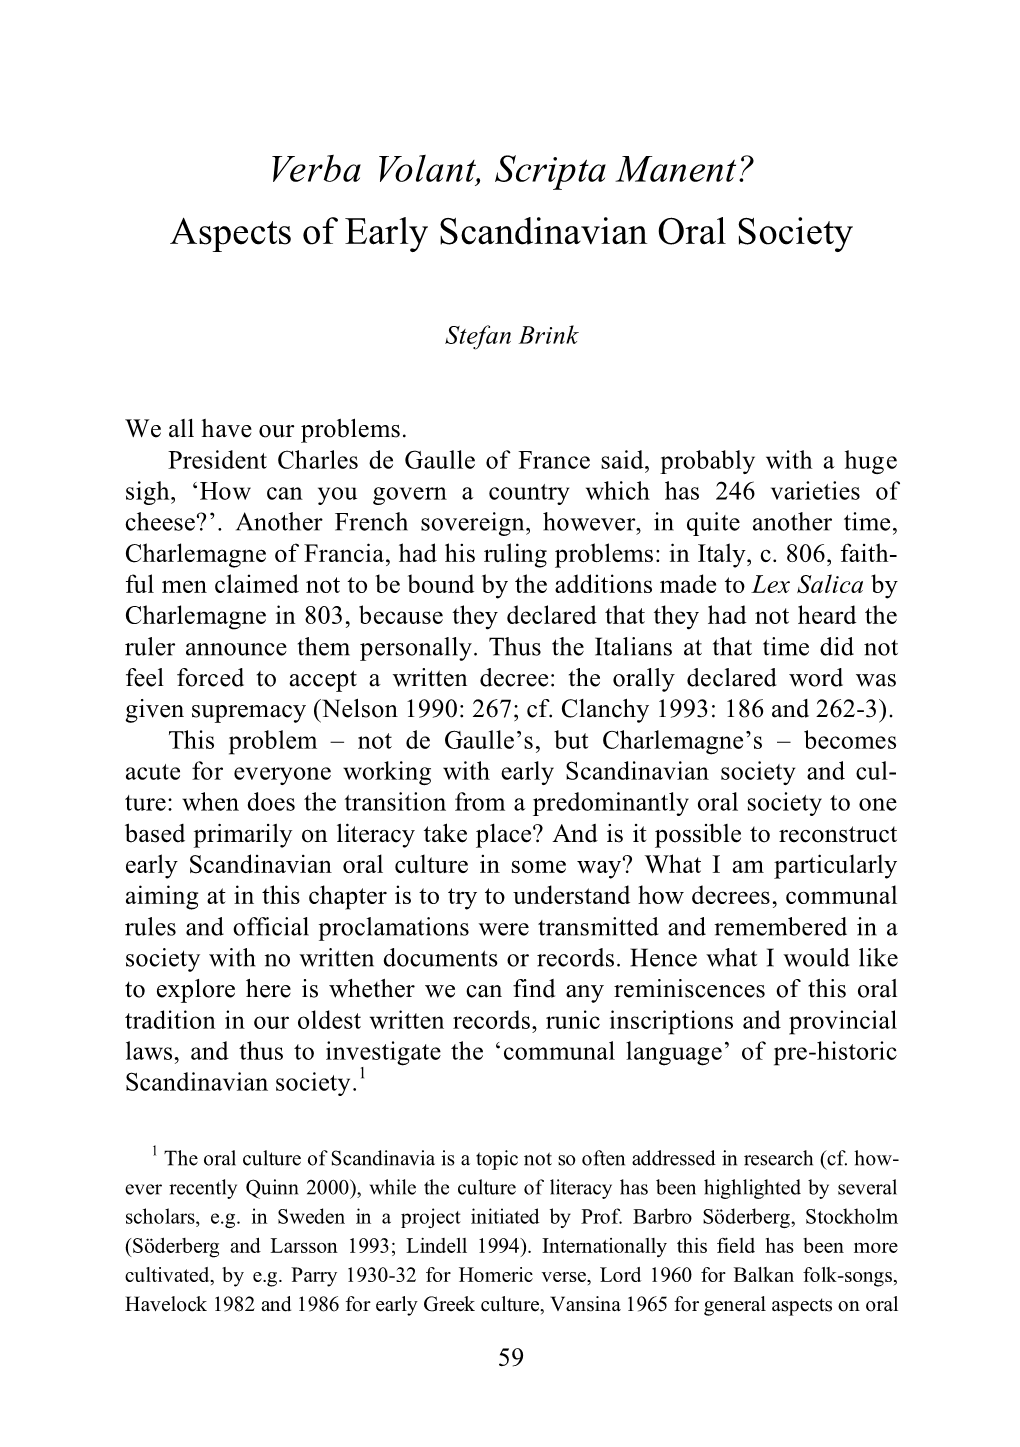 Verba Volant, Scripta Manent? Aspects of Early Scandinavian Oral Society